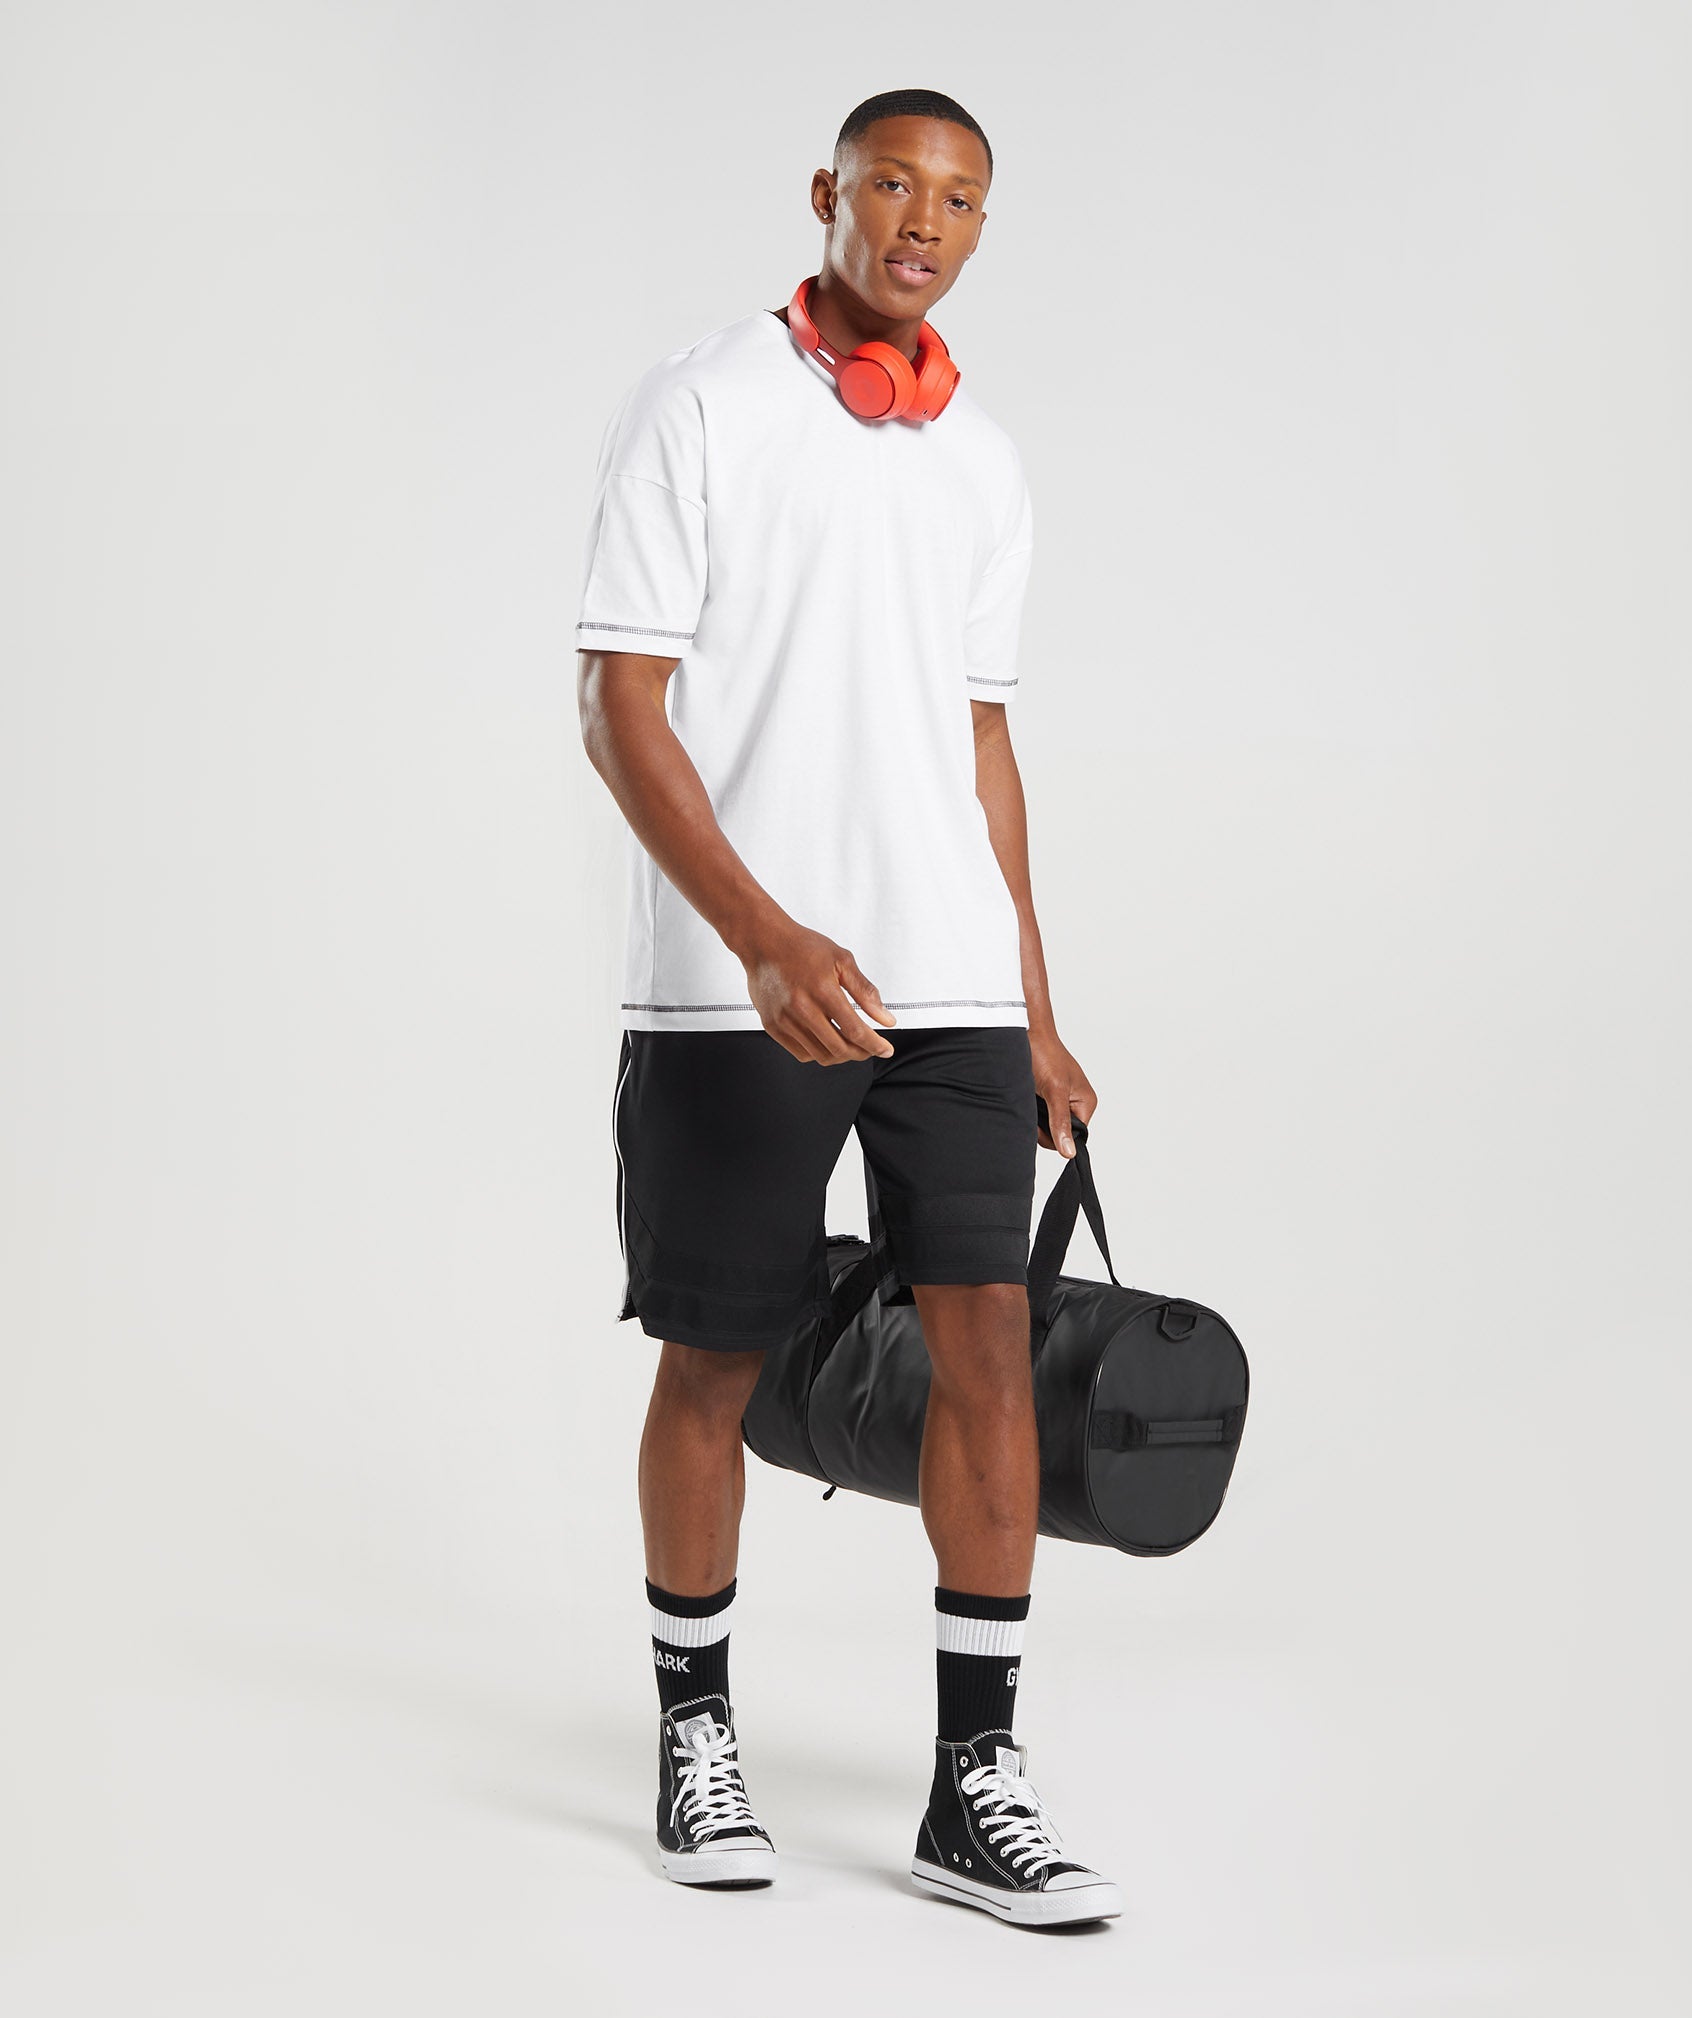 Camiseta Gymshark Portugal - Gymshark Recess Homem Branco Azuis - Roupa  Gymshark Comprar Online